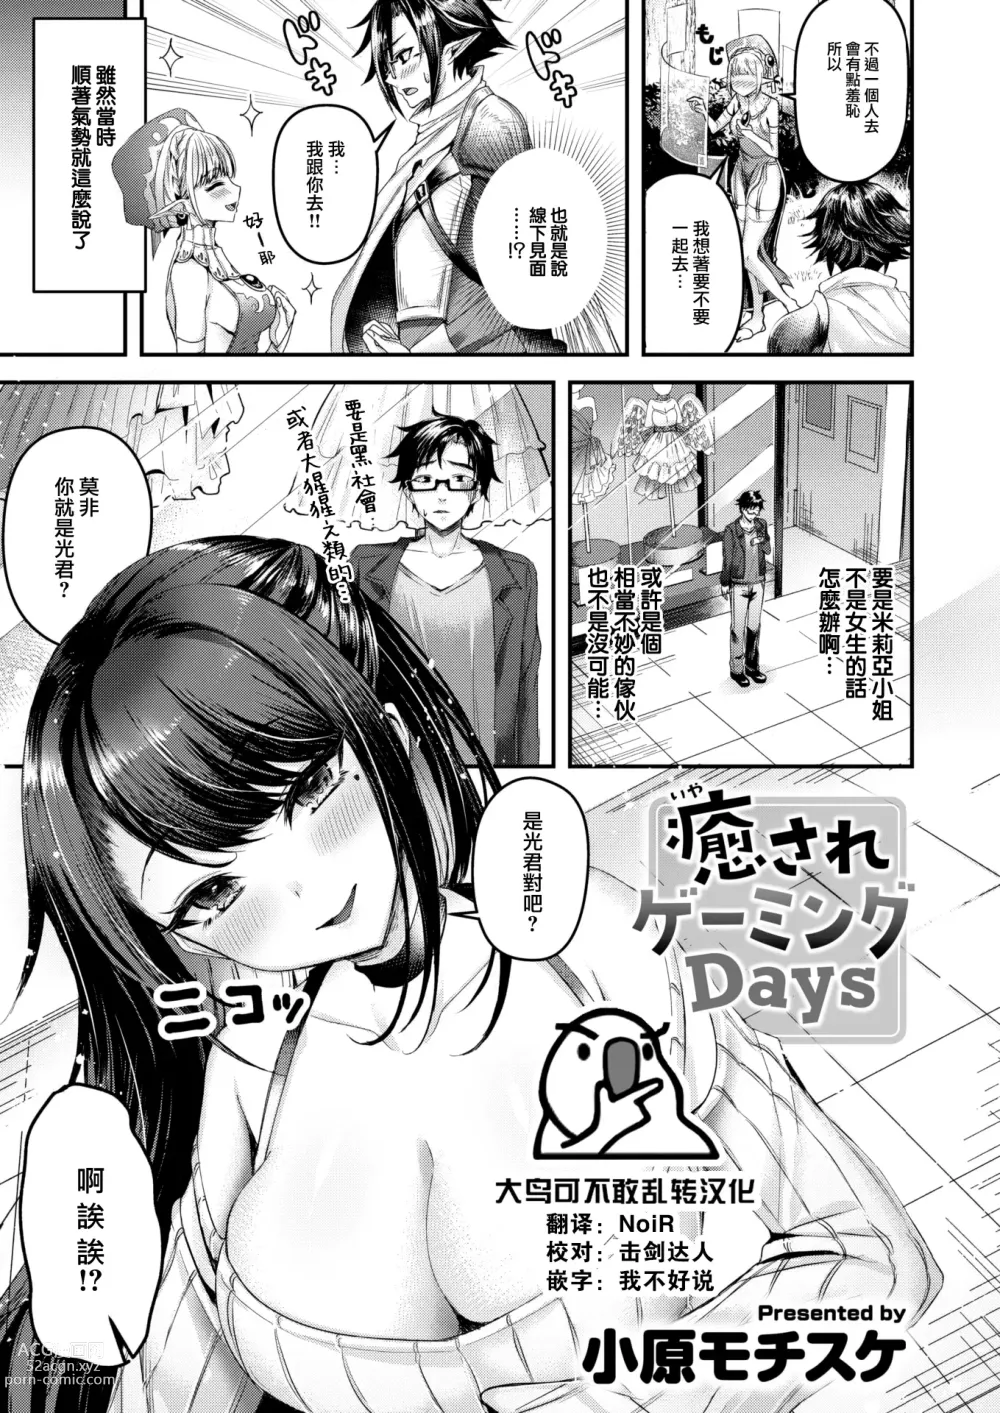 Page 1 of manga Iyasare Gaming Days